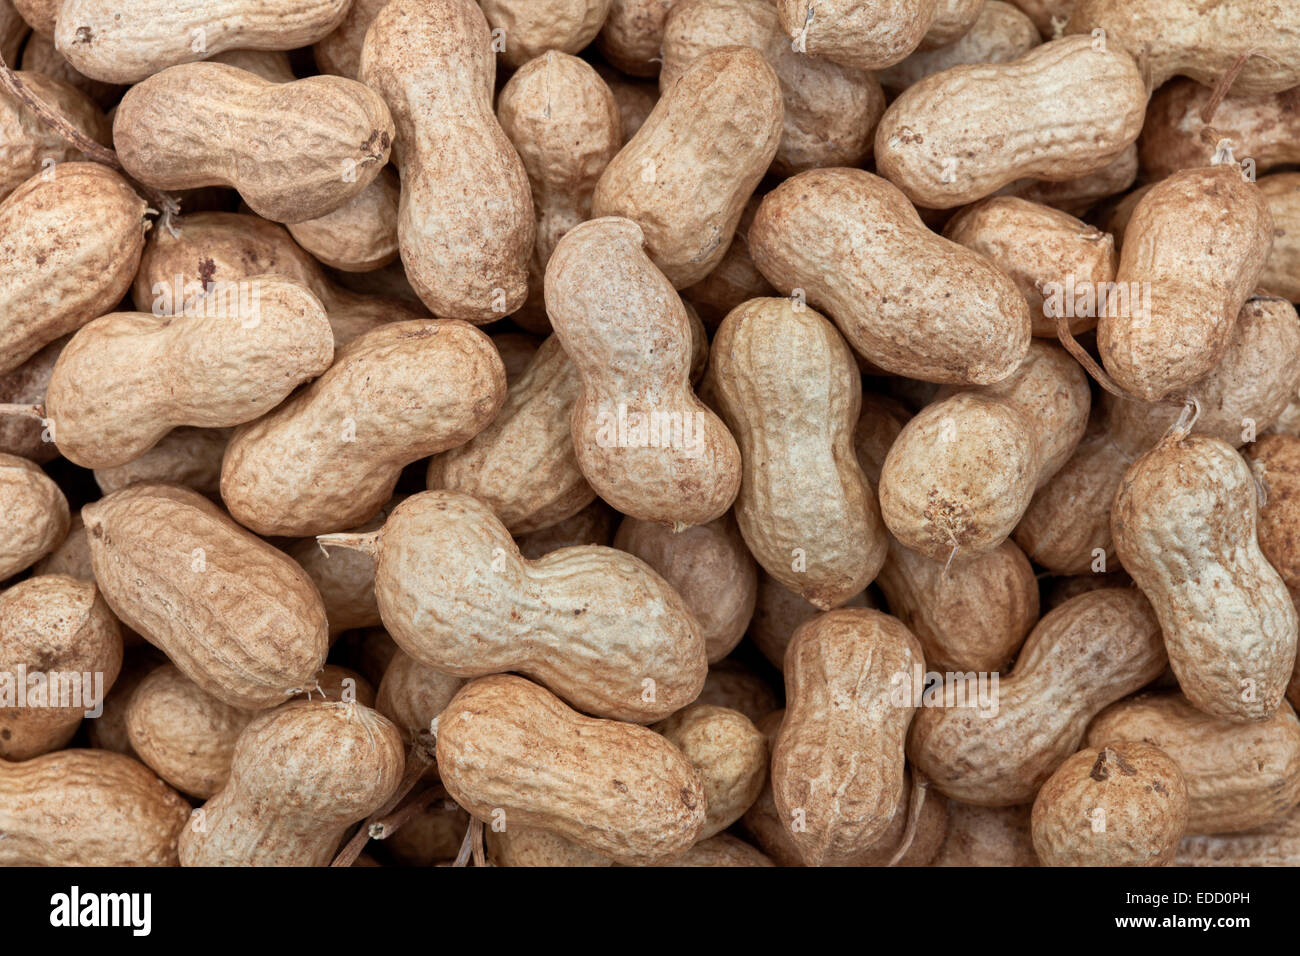 Close-up of 'Spanish' peanuts. Stock Photo